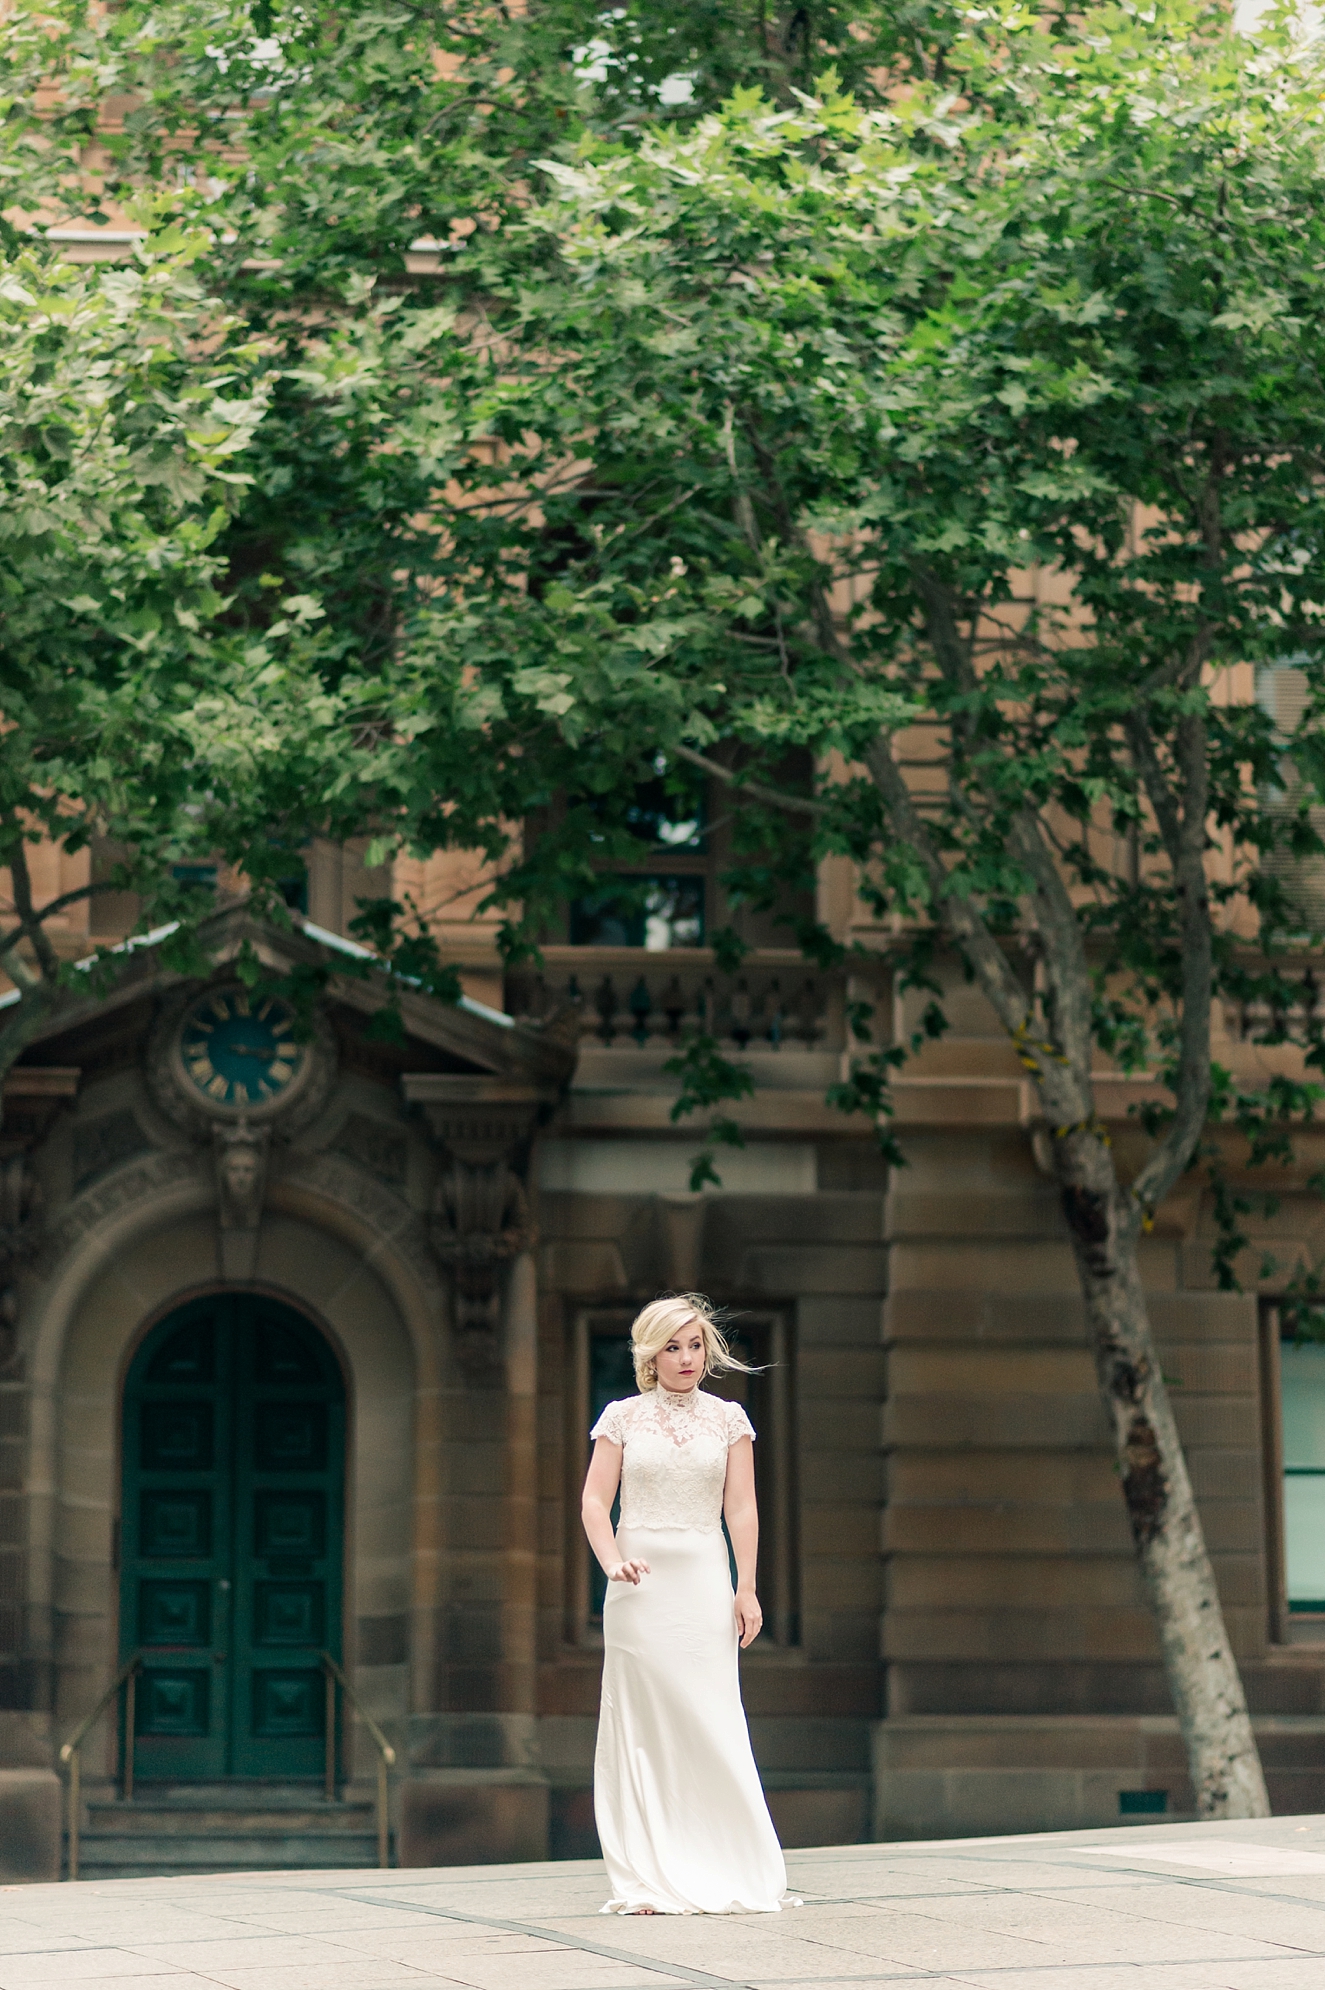 Sydney, Australia | Lace Gown Bridal Portraits | East Coast and Destination Wedding Photographer | Lauren R Swann